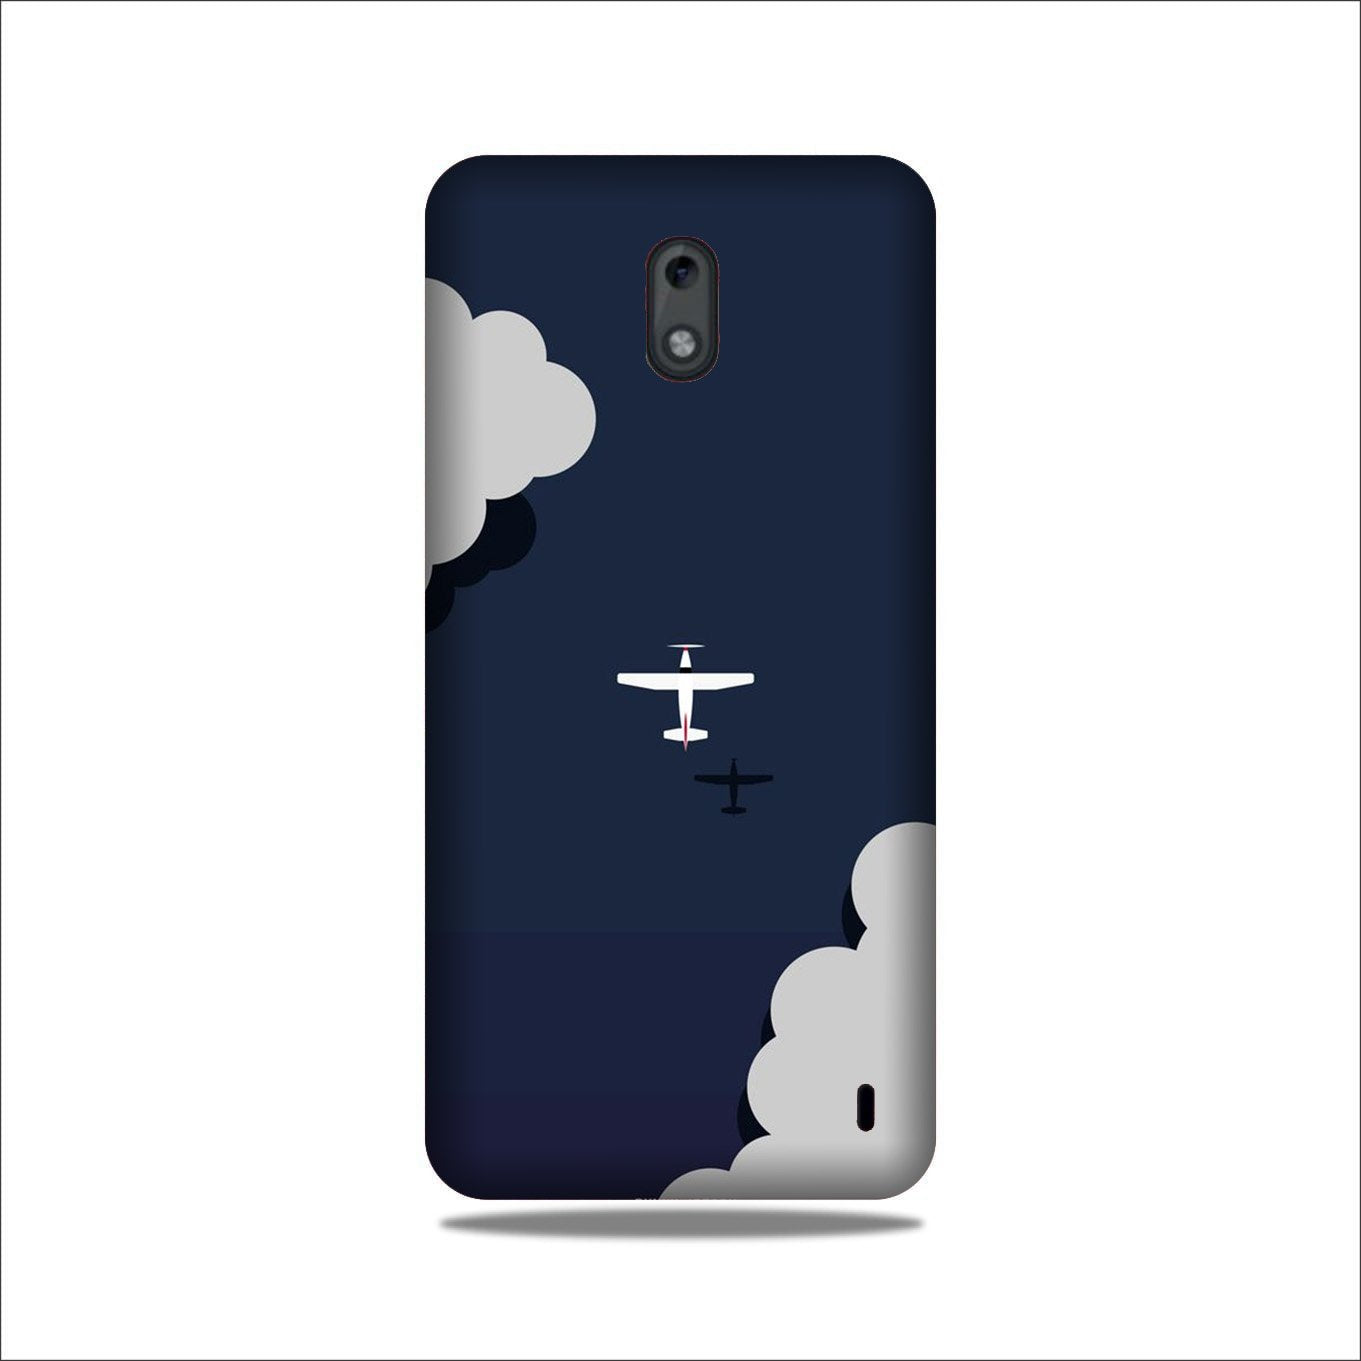 Clouds Plane Case for Nokia 2 (Design - 196)